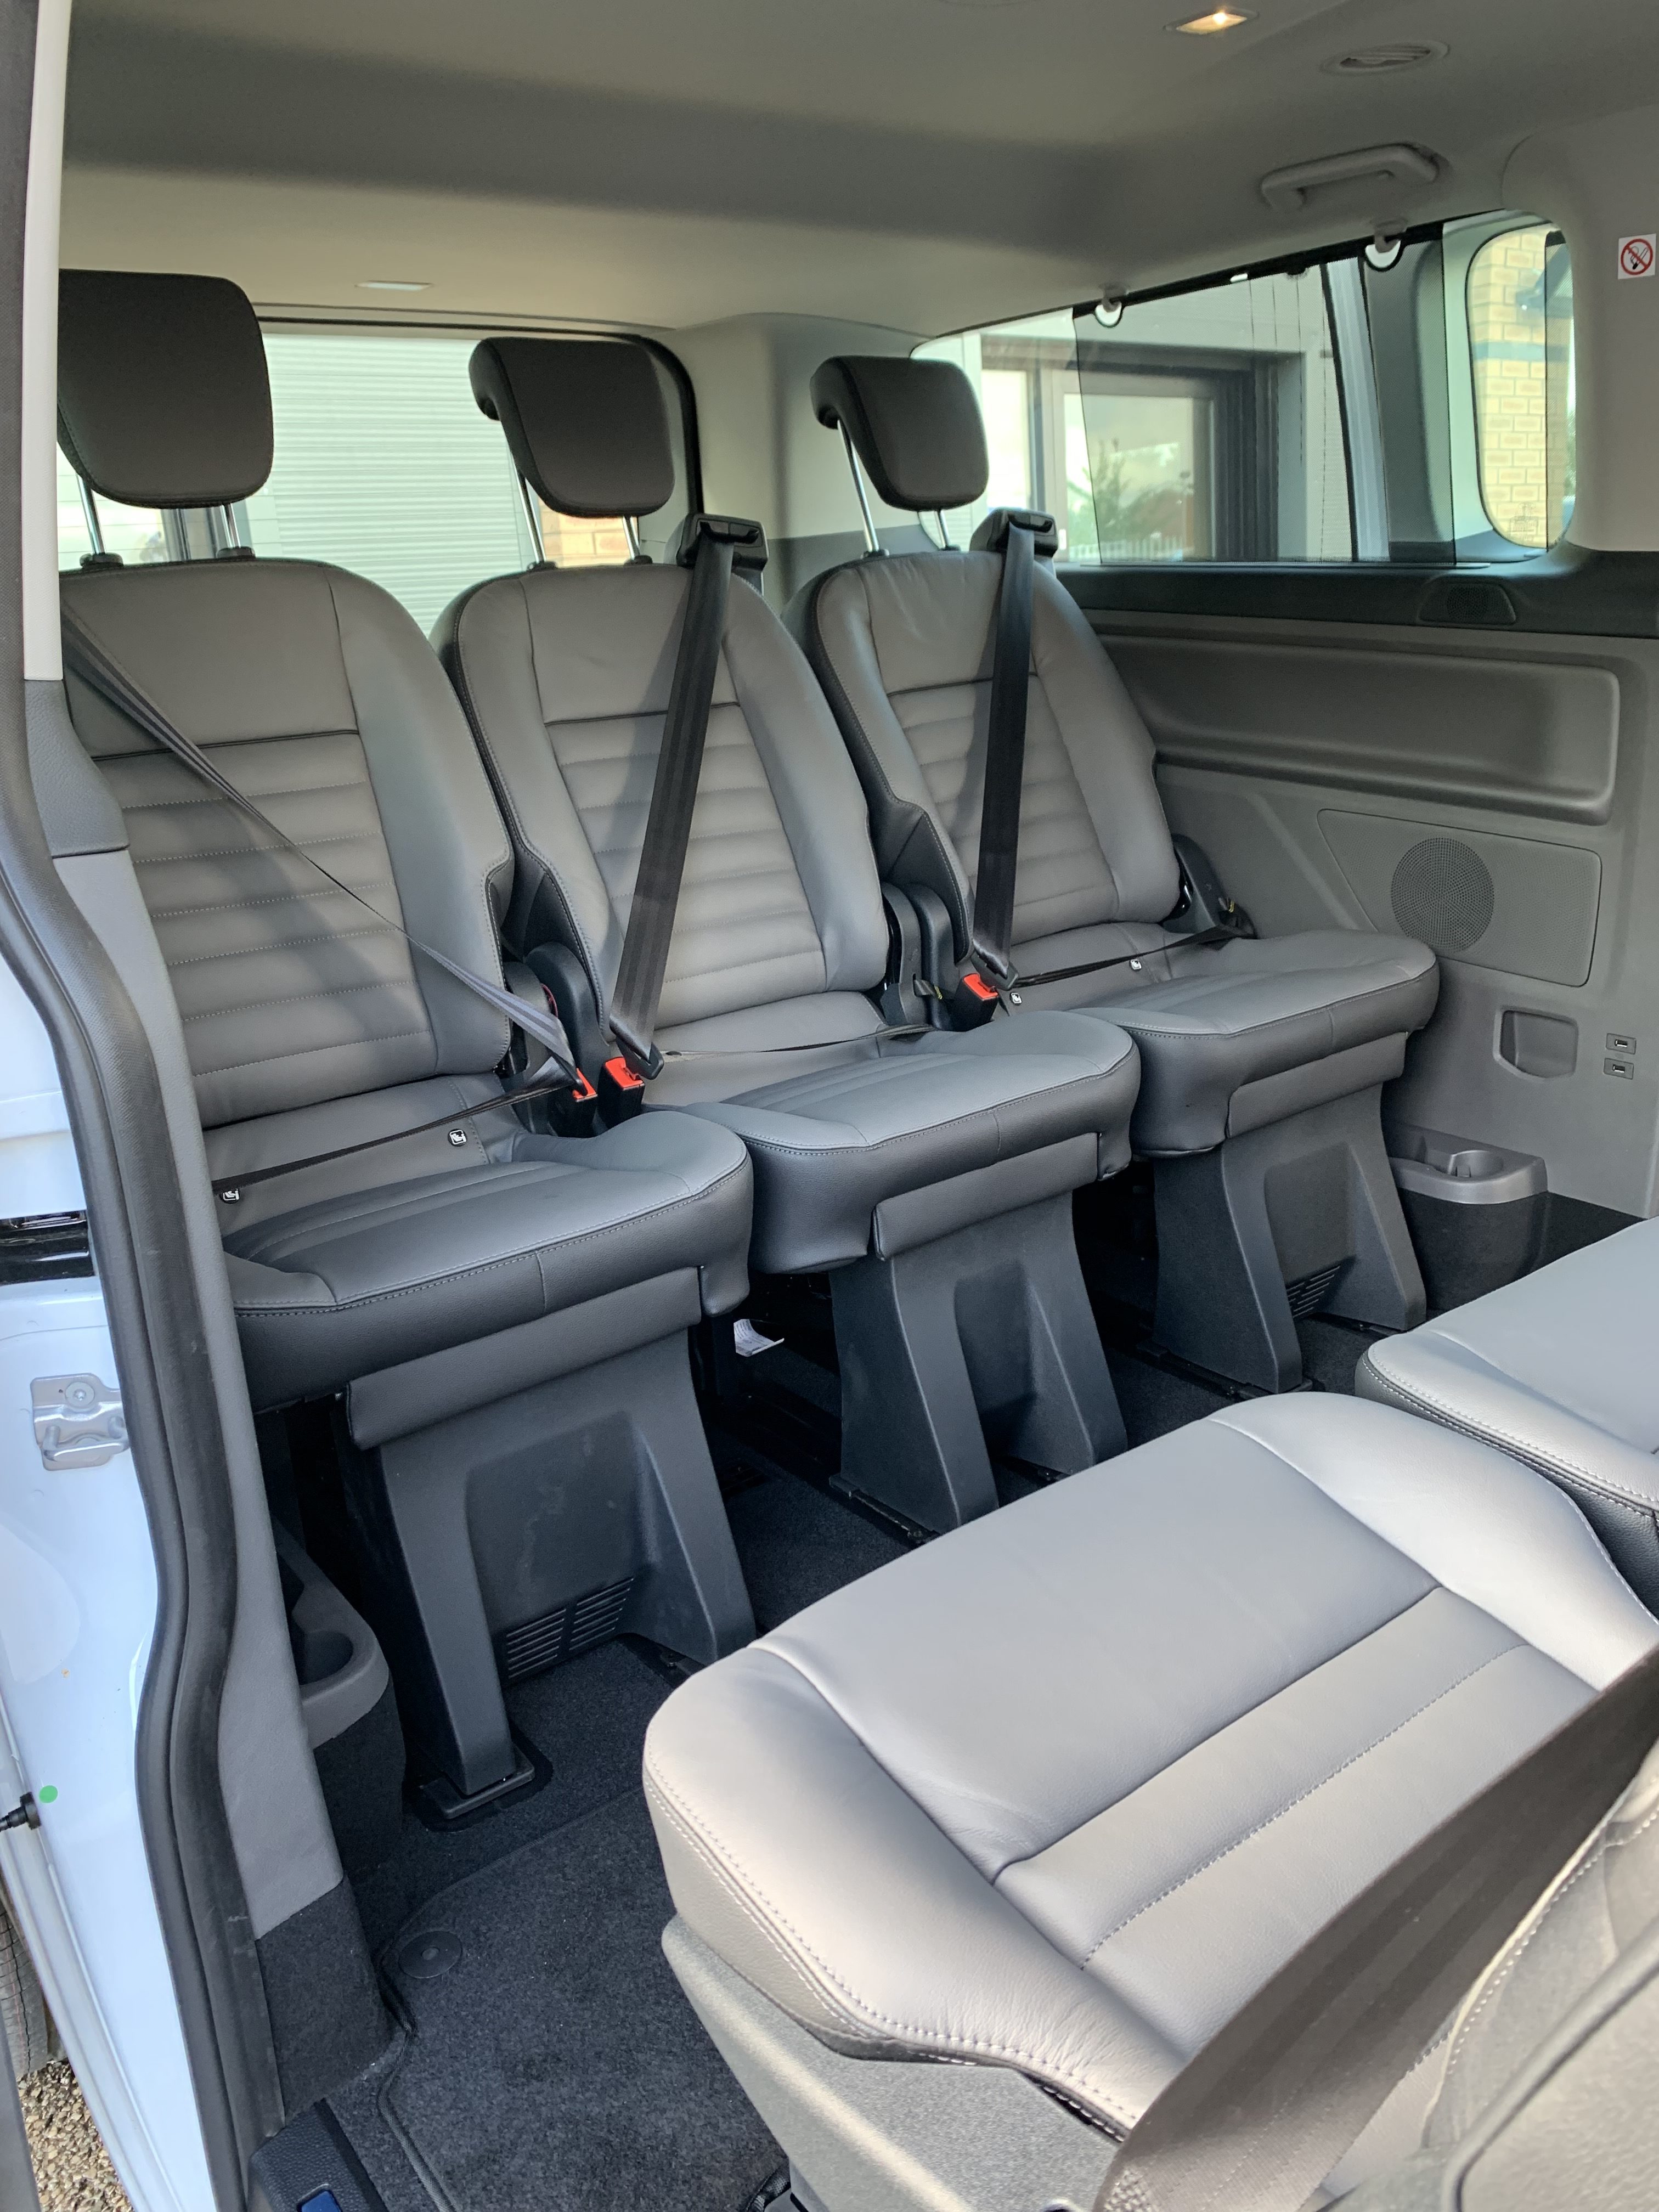 Ford Transit Tourneo Custom (9-Seater)